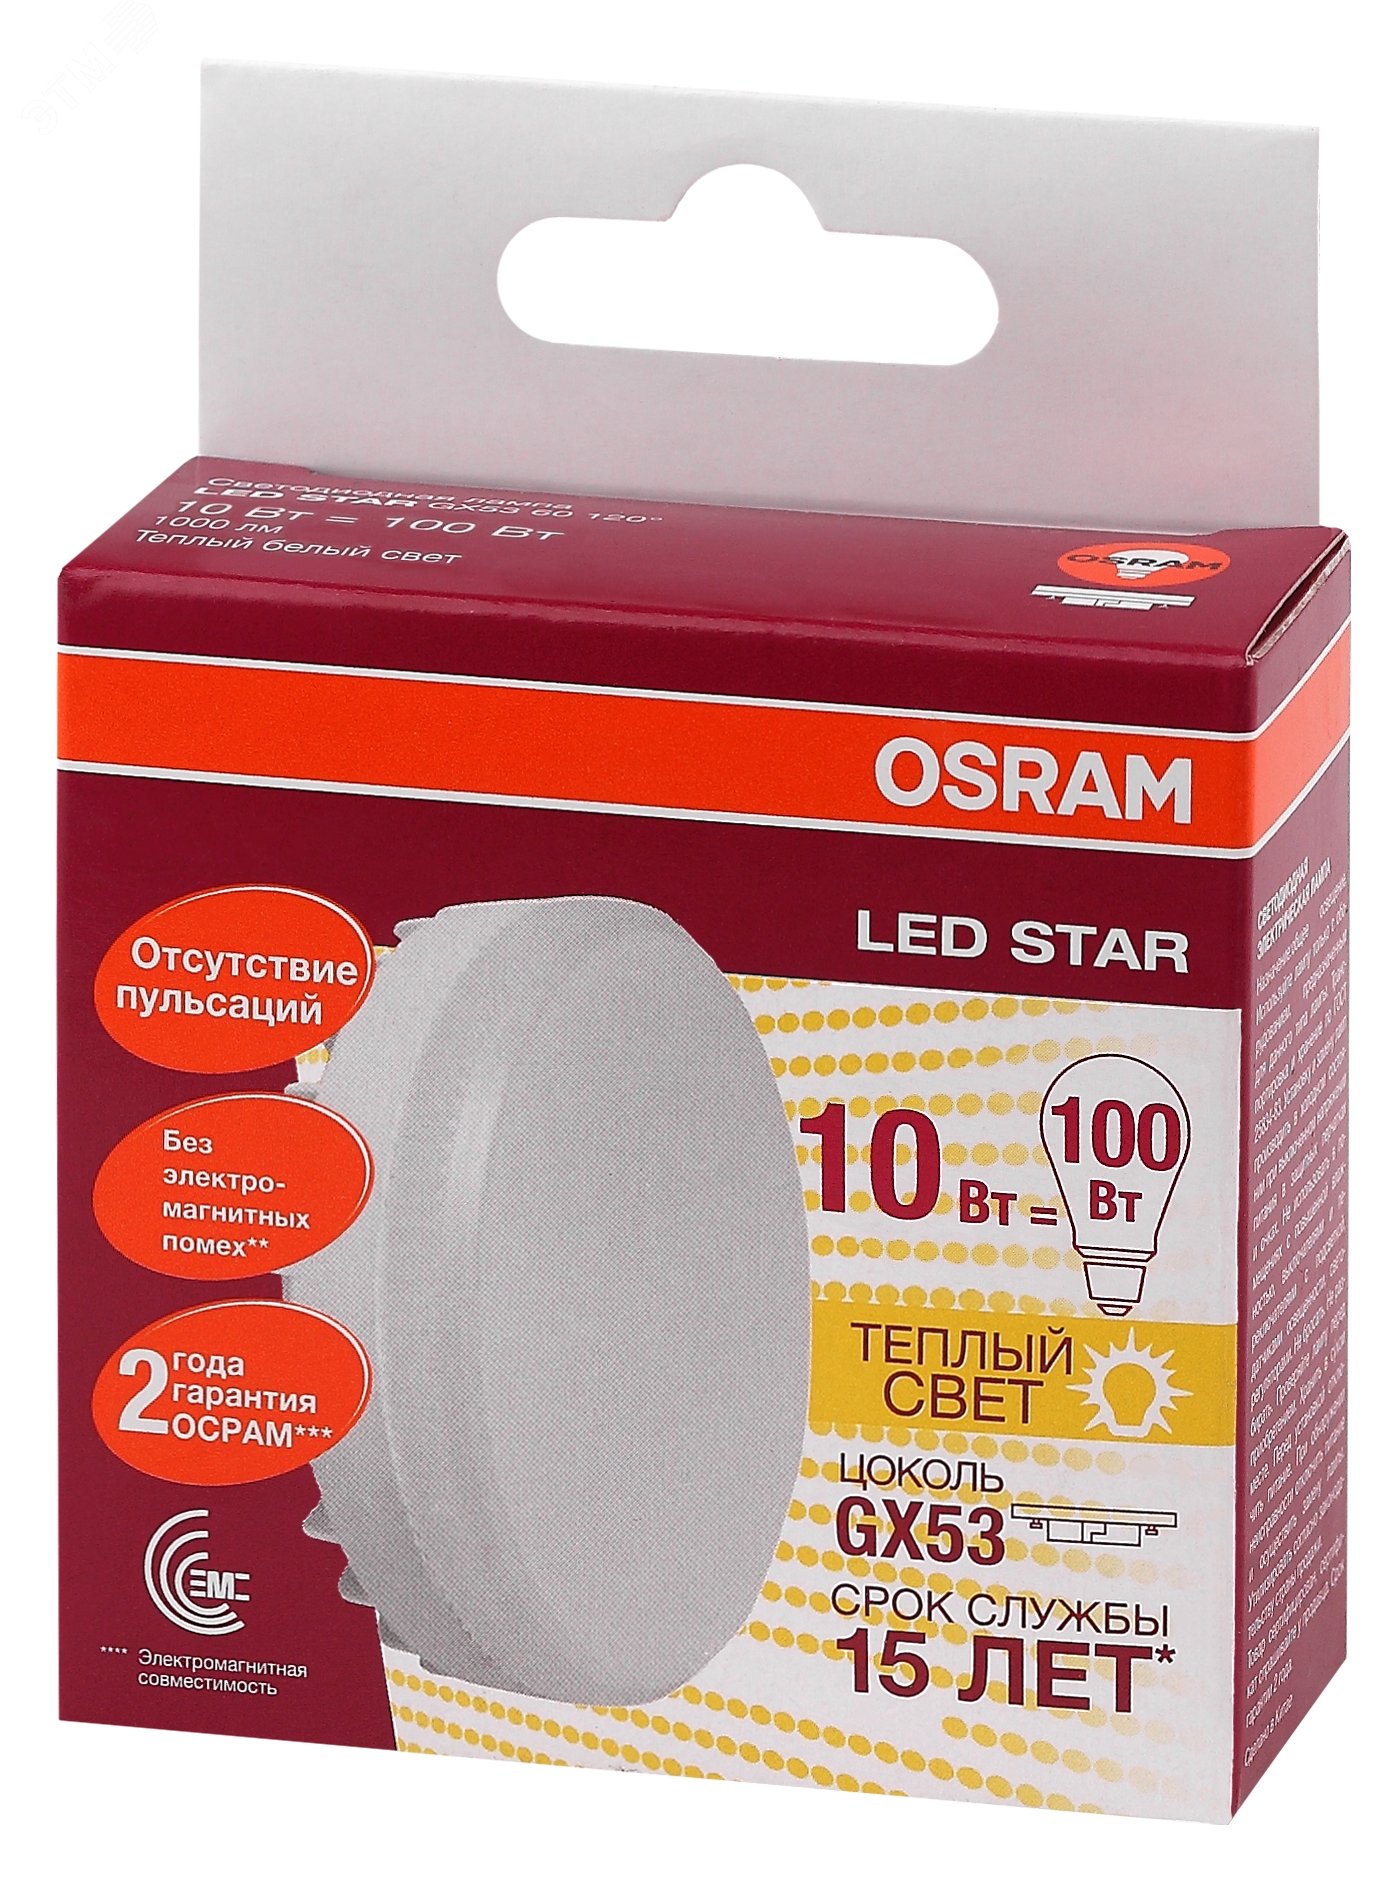 Лампа светодиодная LED 10Вт GX53 2700К 1000лм таблетка 230V FR GX (замена 100Вт) OSRAM 4058075496378 LEDVANCE - превью 4